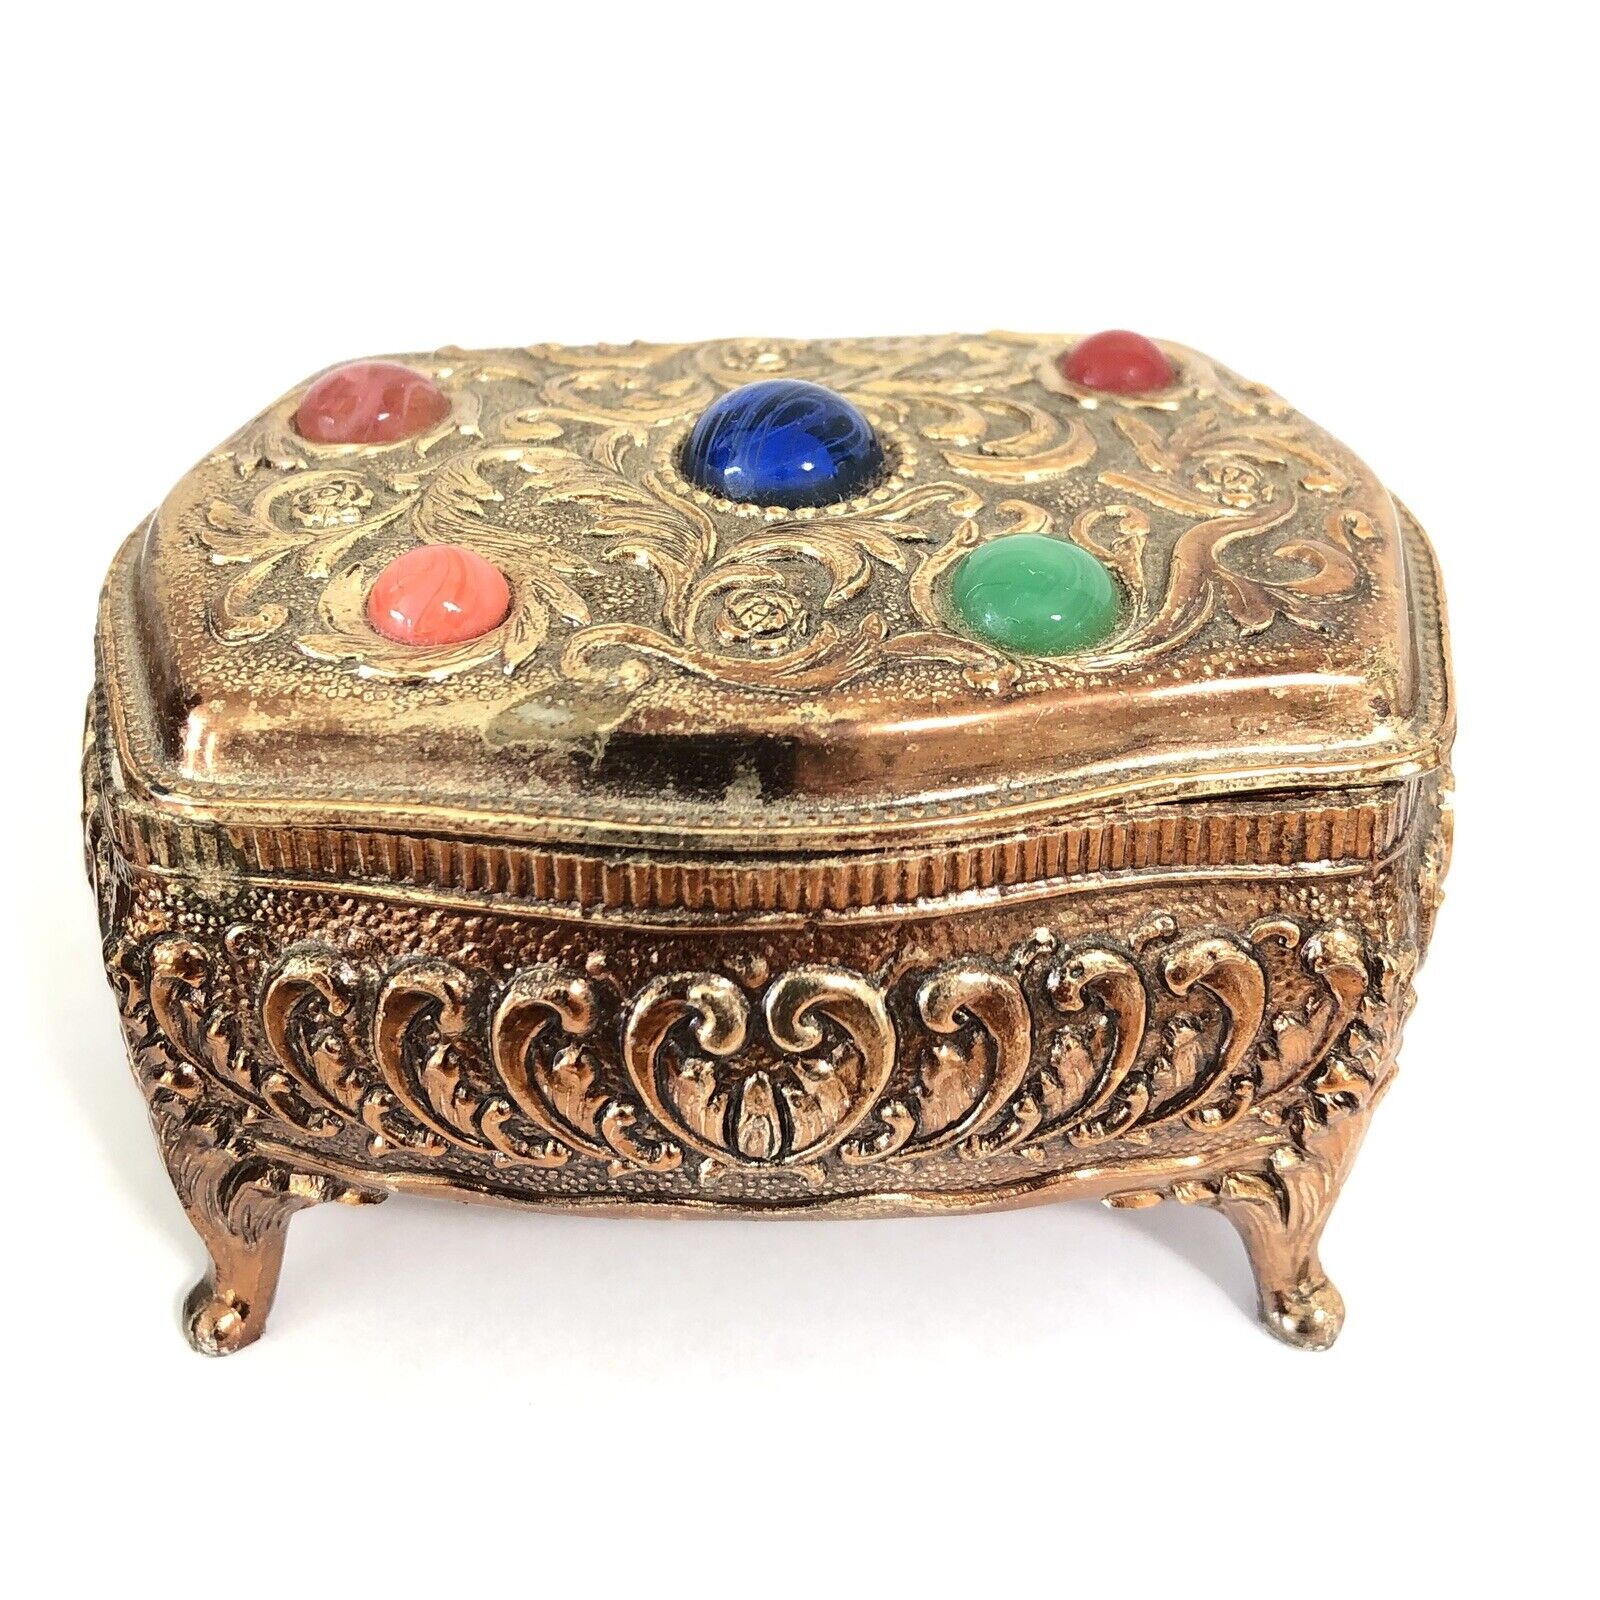 Vintage Gold Jewelry Box, Jewelry Casket, Ornate Gold Box